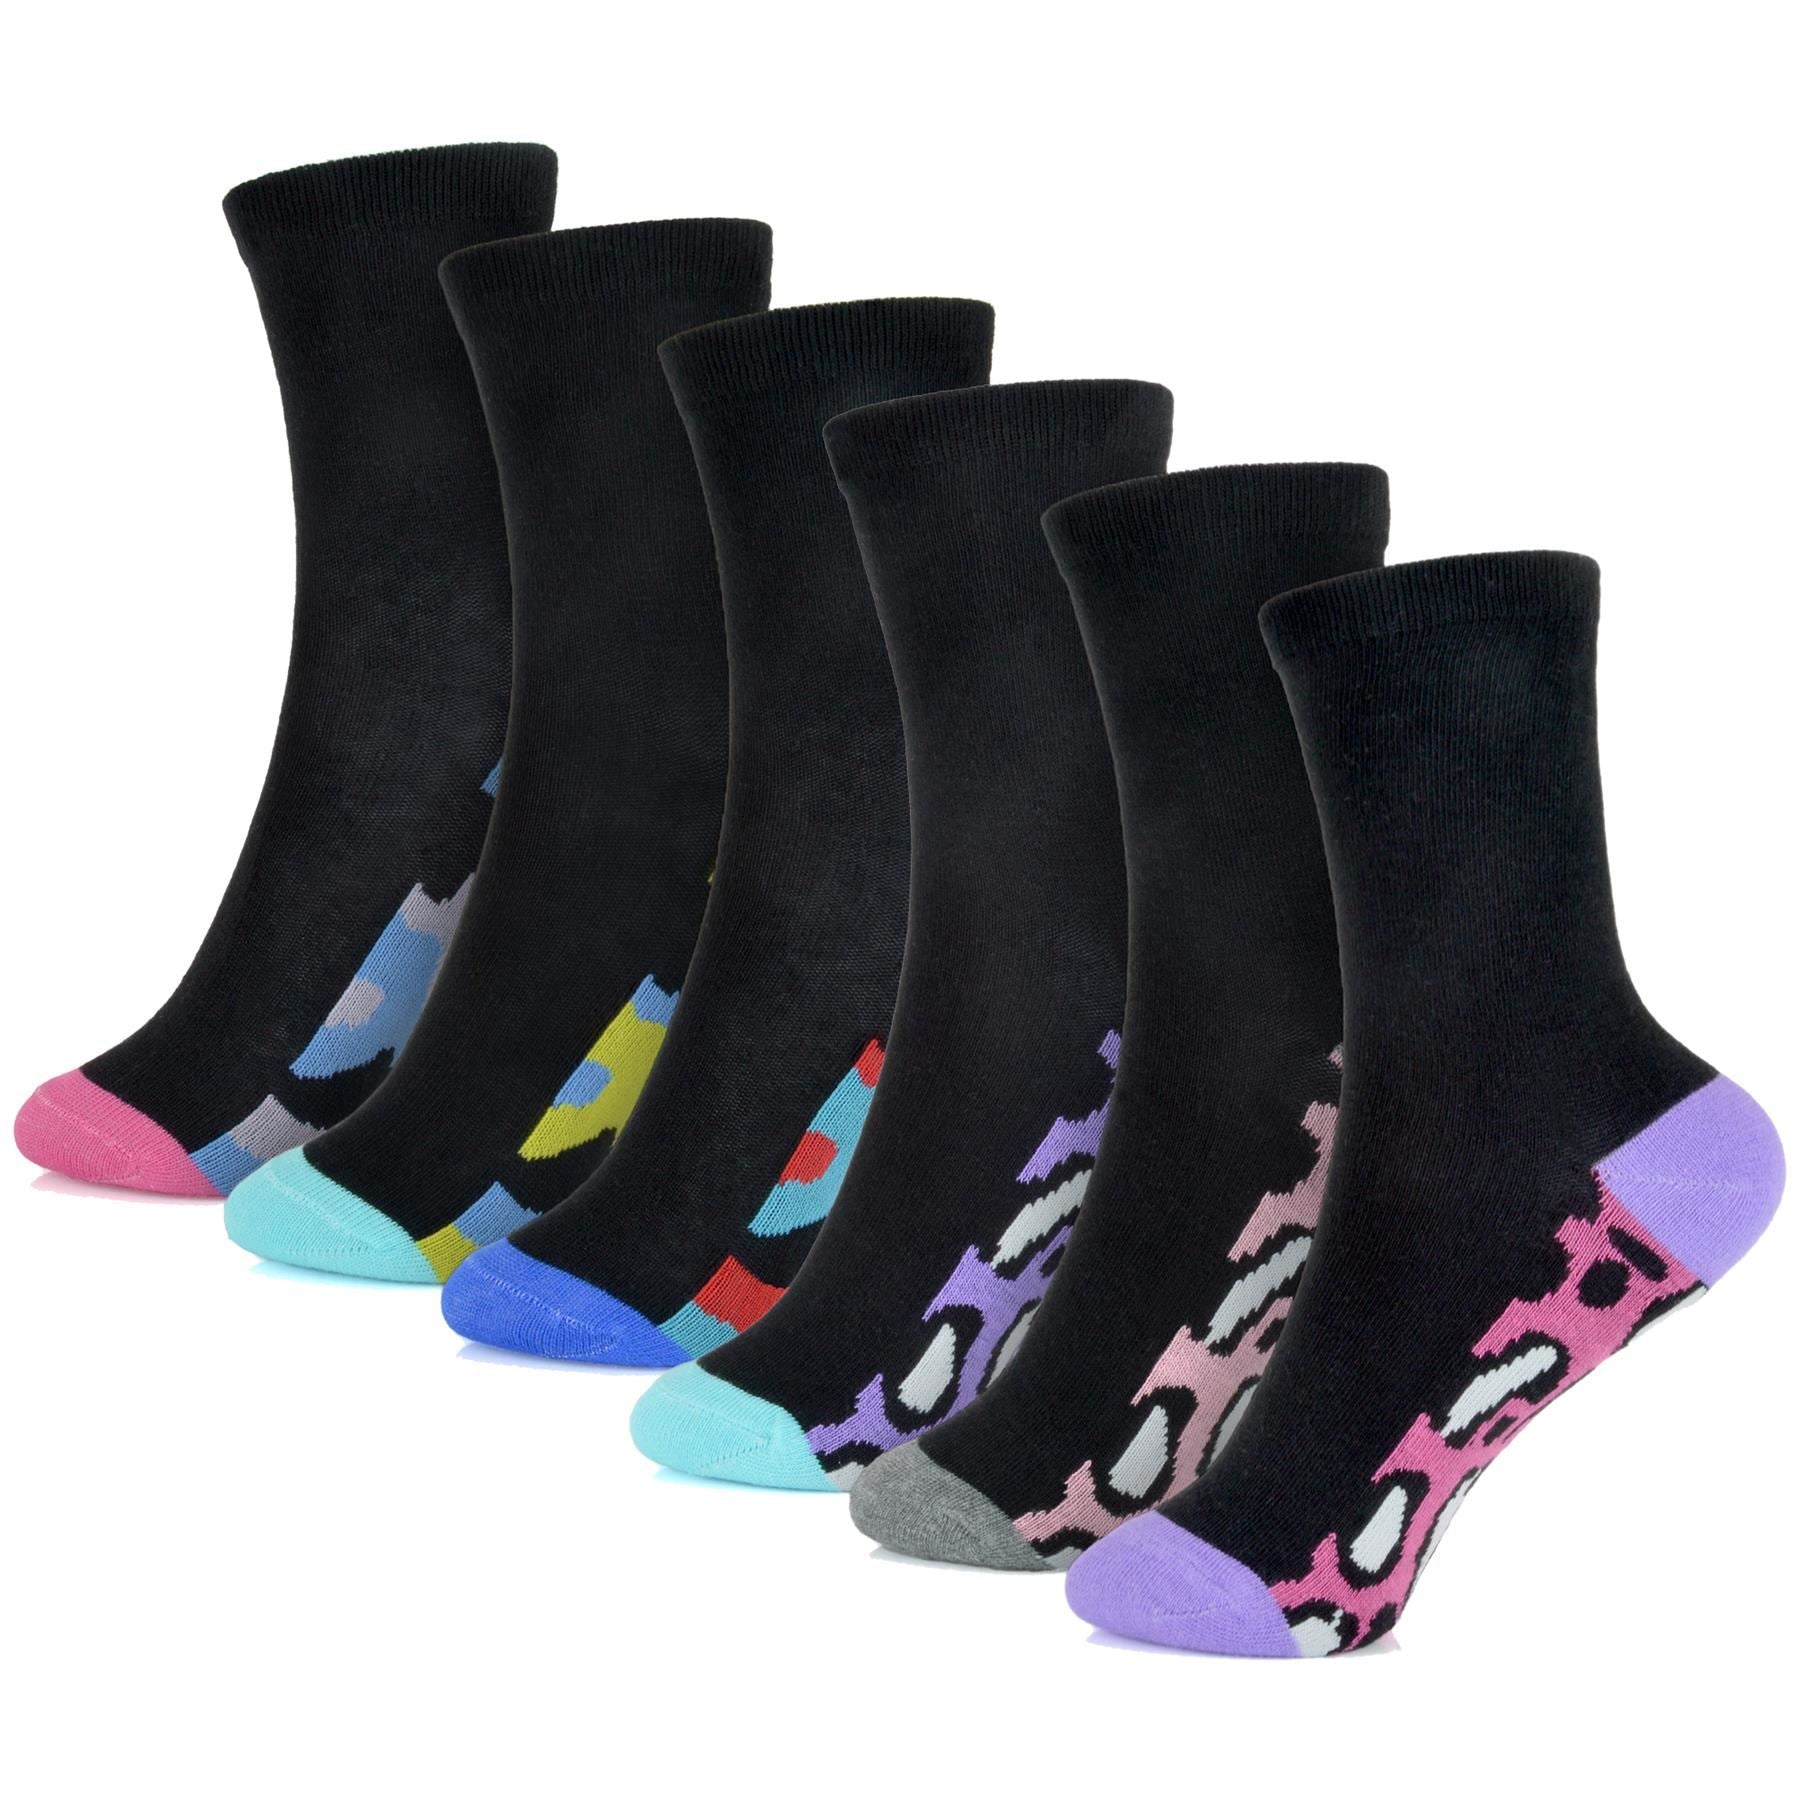 Kids Girls Camouflage Heel & Toe Socks Black Camo Socks Pack of 3 Kids Footwear